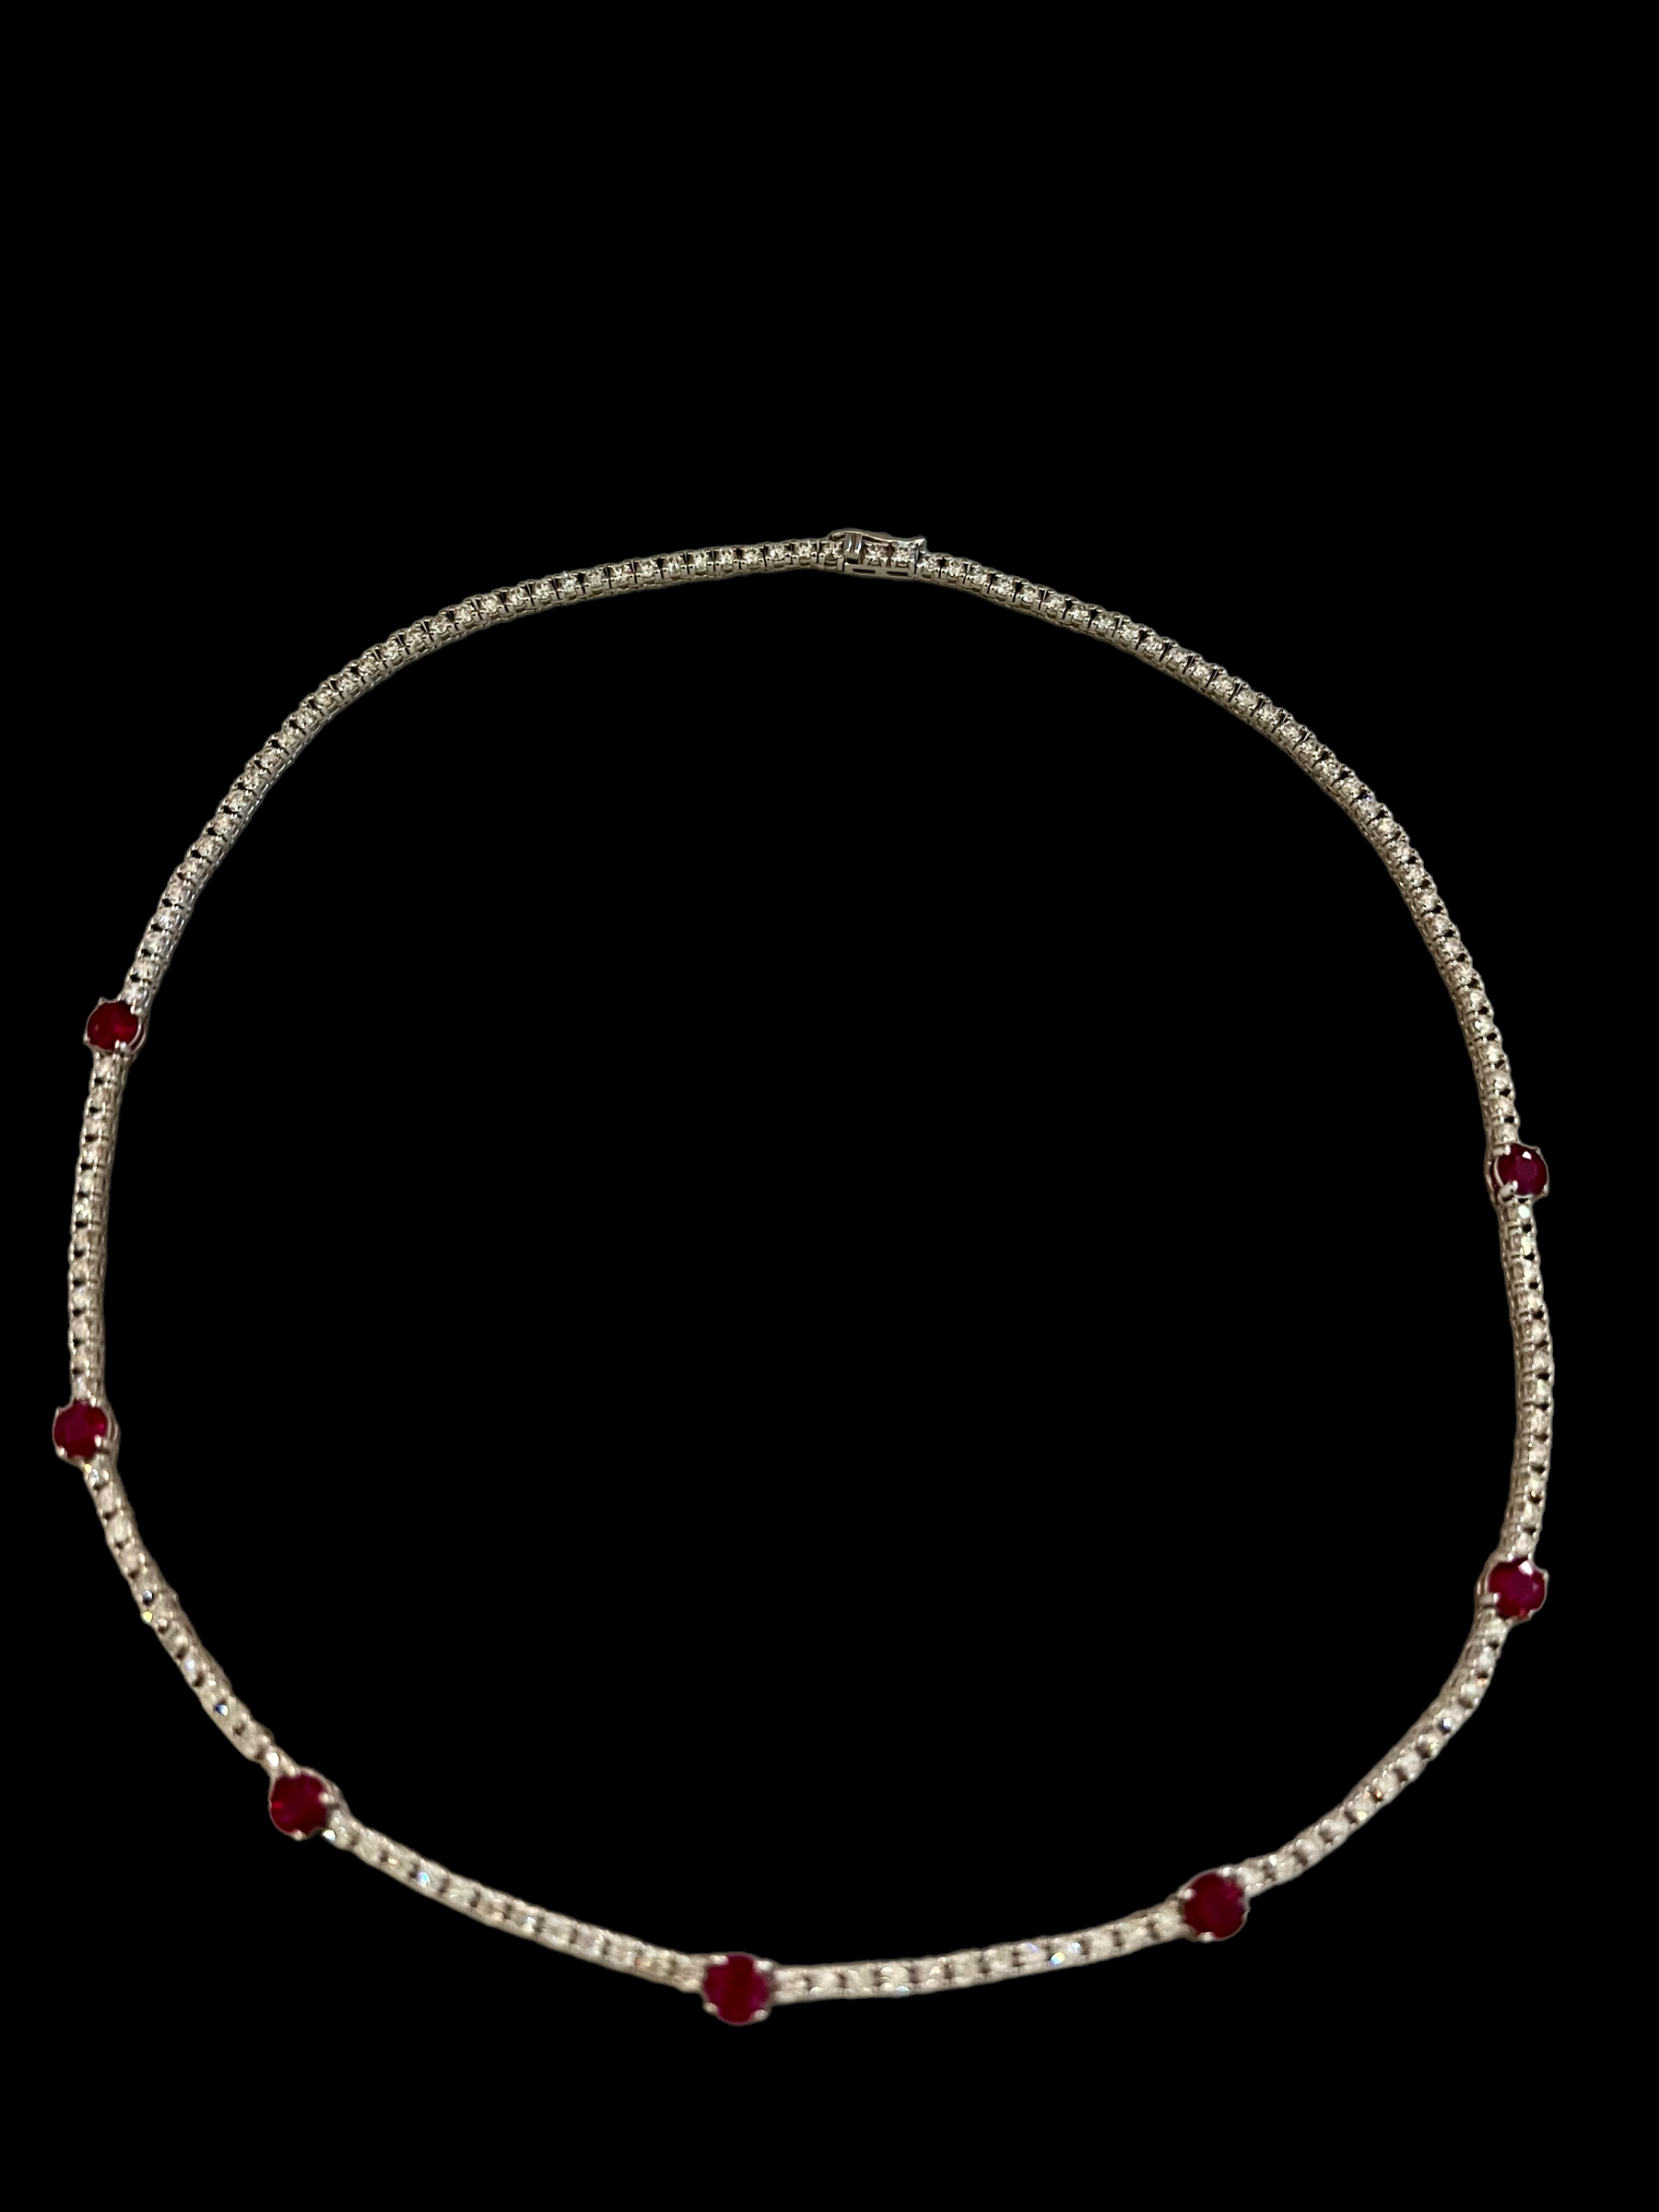 Burma Ruby Diamond Choker Necklace